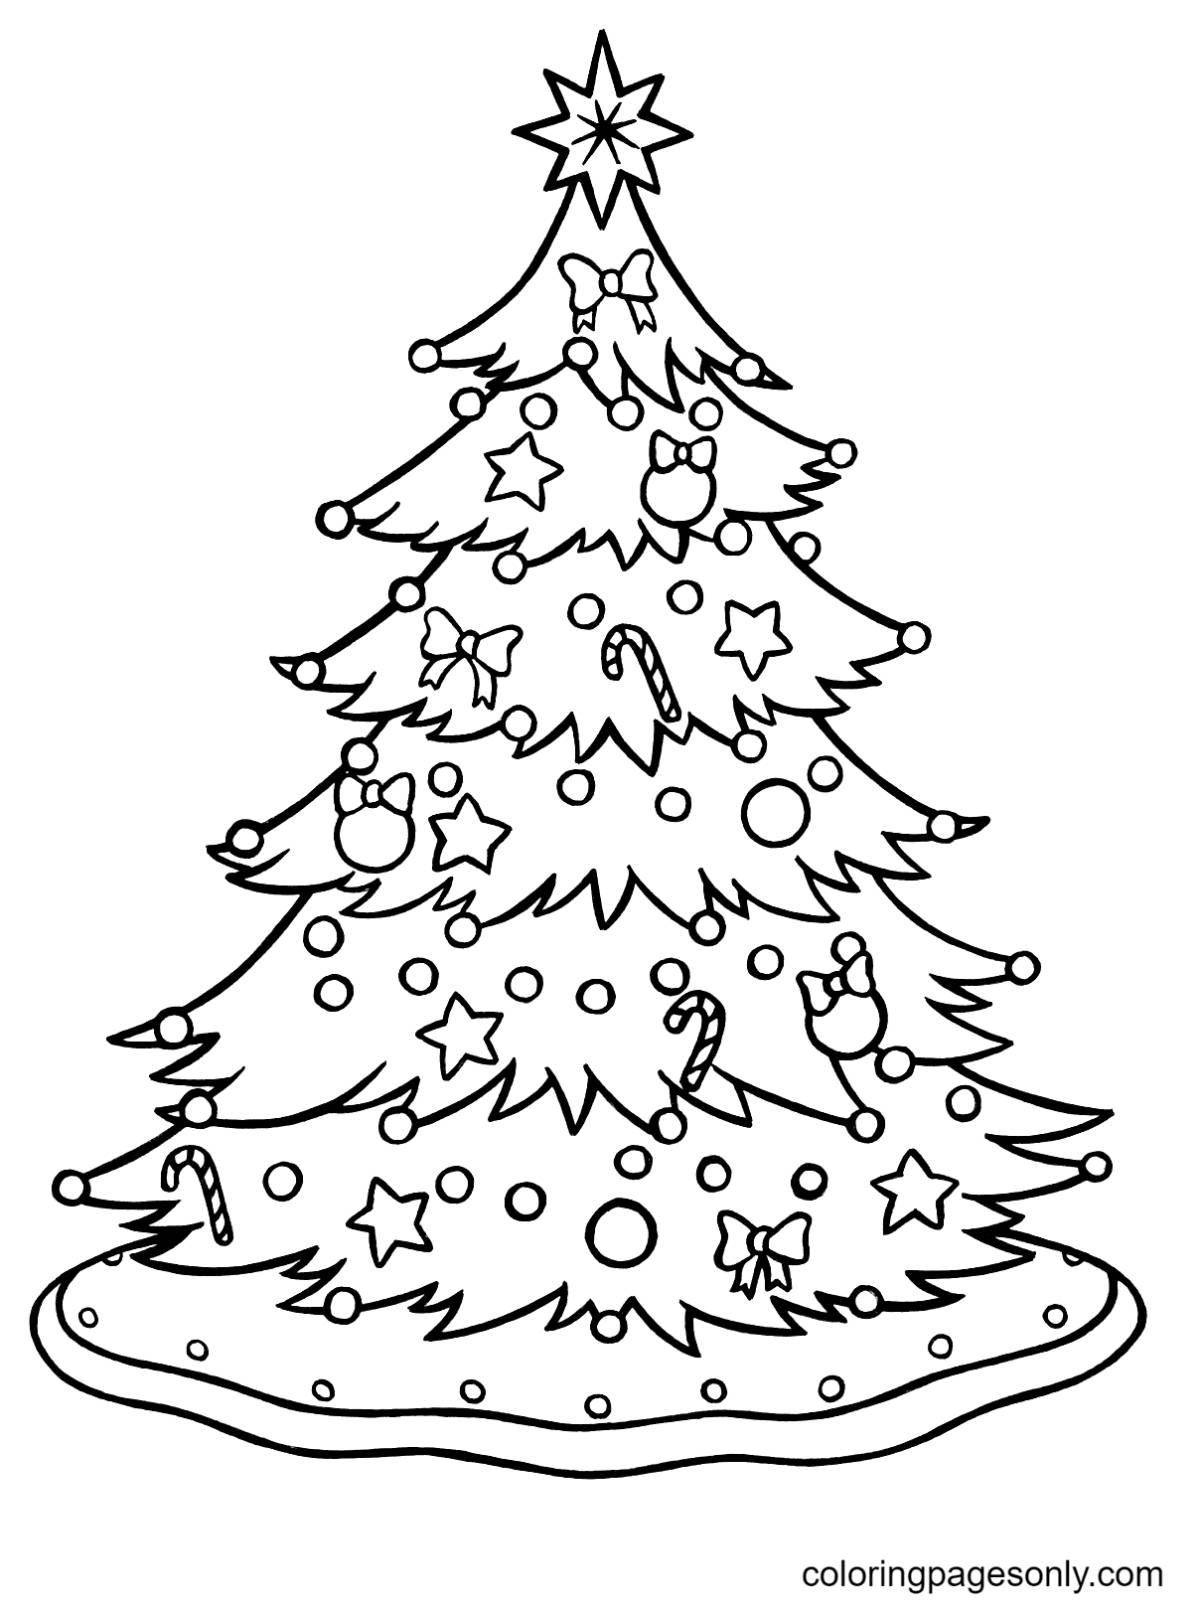 Christmas tree creative coloring card